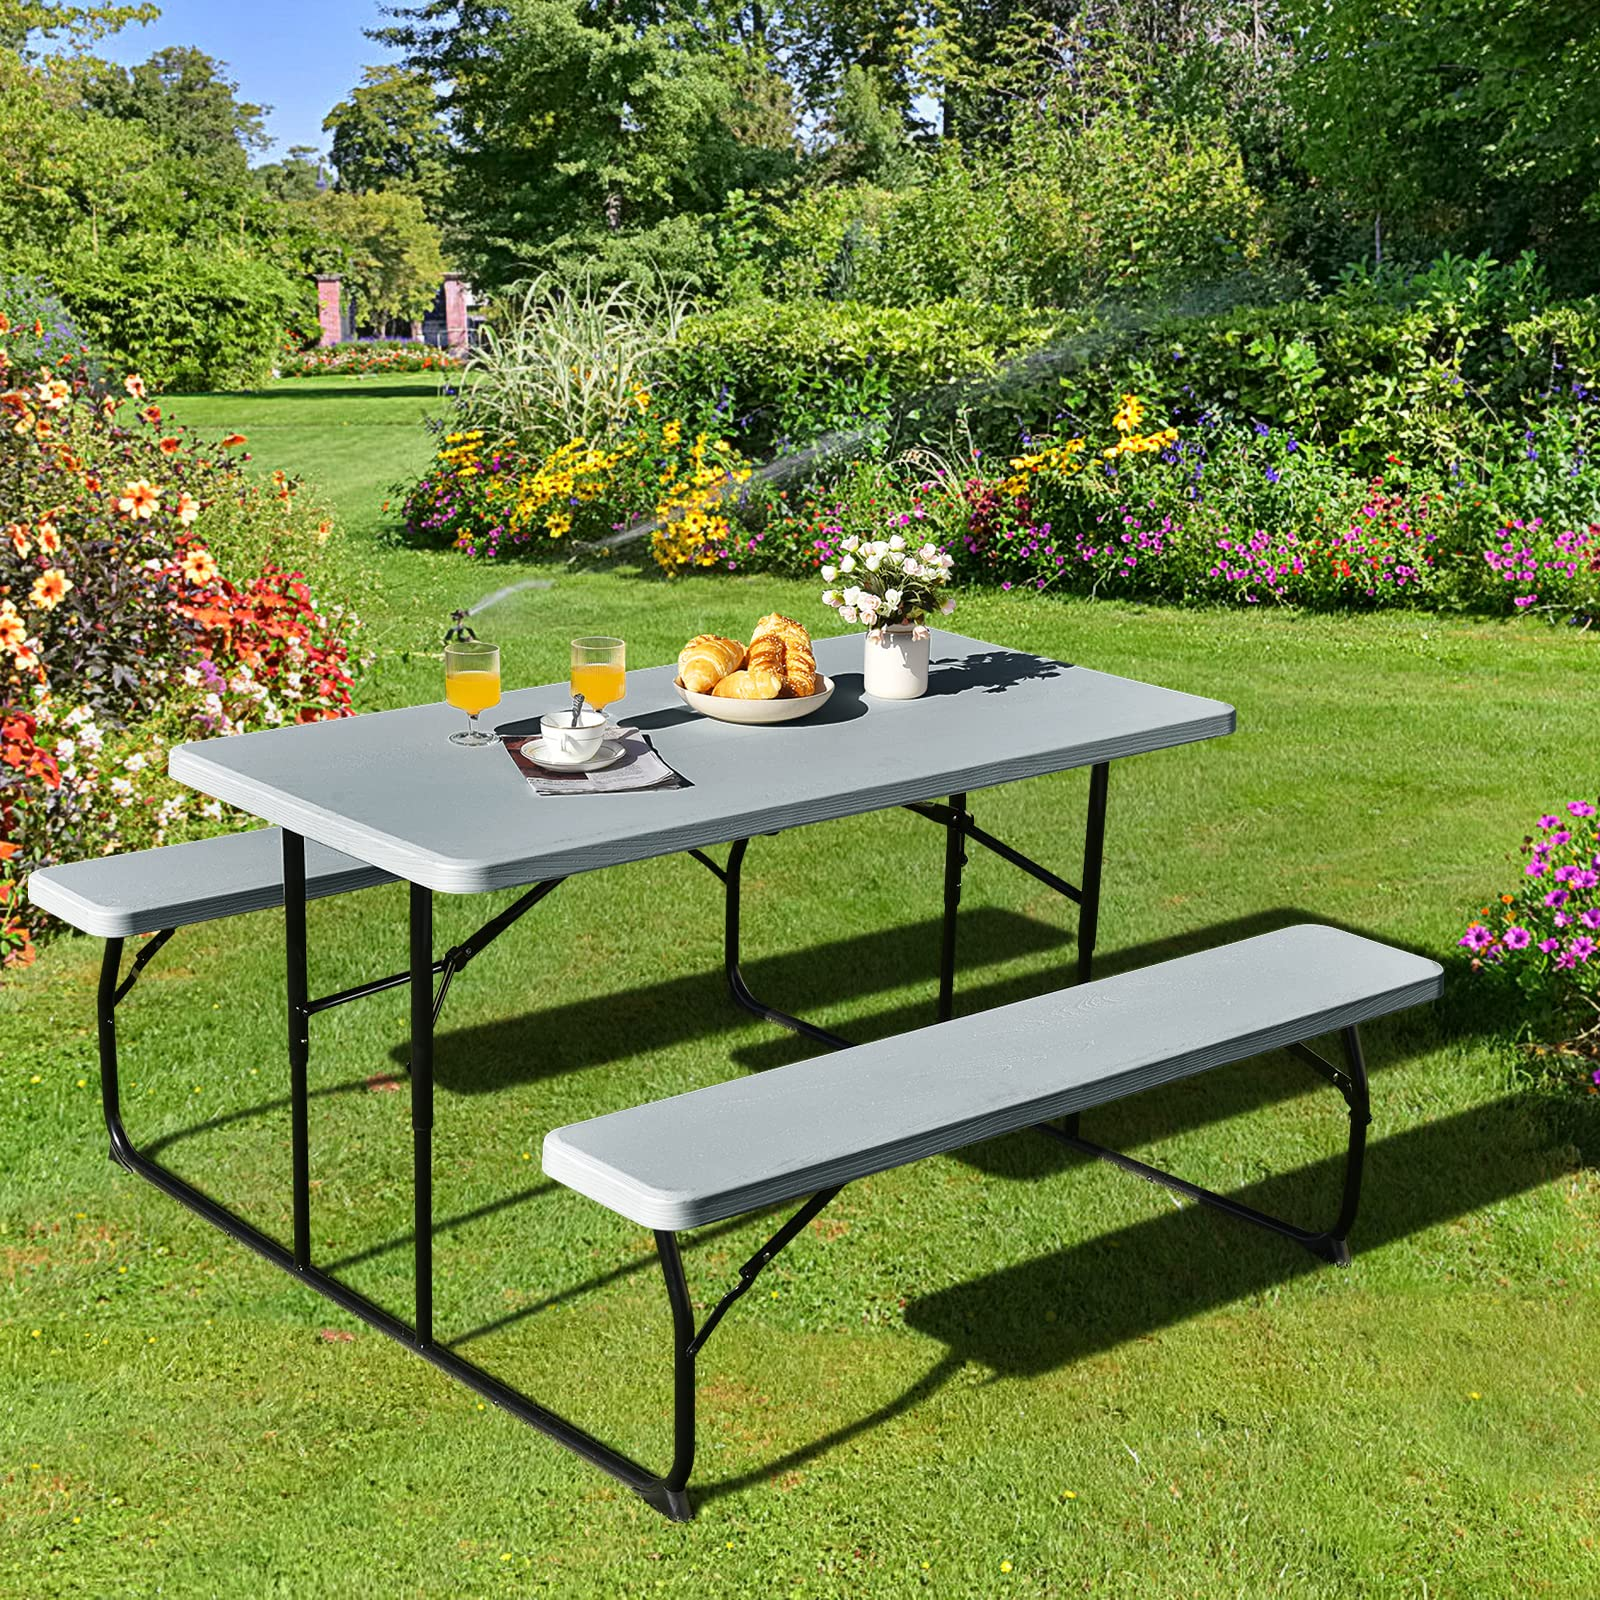 Giantex Folding Picnic Table Bench Set, Outdoor Dining Table Set